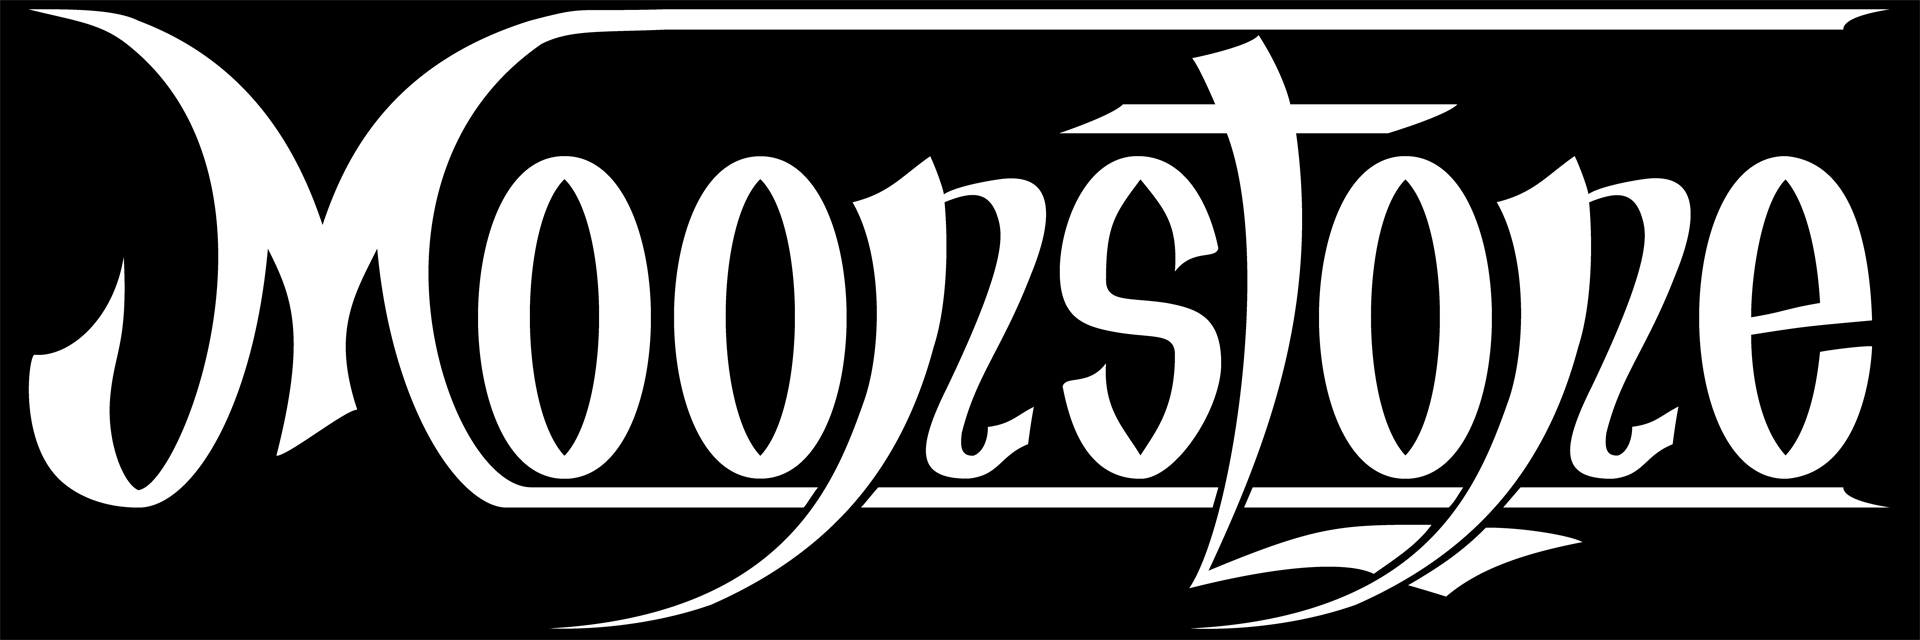 Moonstone Logo 1920x640